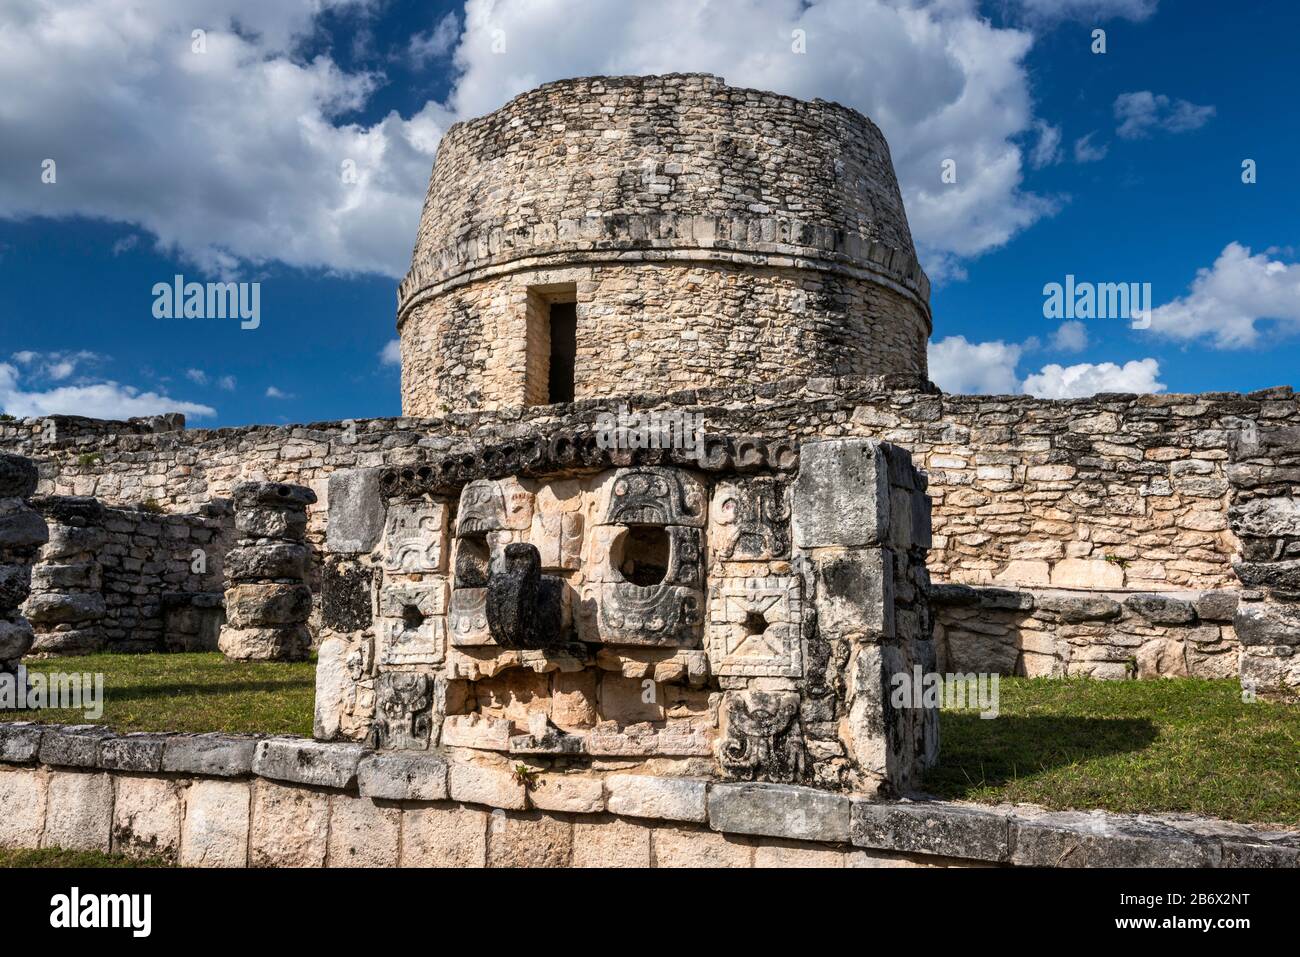 Mask of  rain god Chaac, El Templo Redondo (Rounded Temple), Mayan ruins at Mayapan archaeological site, Yucatan state, Mexico Stock Photo